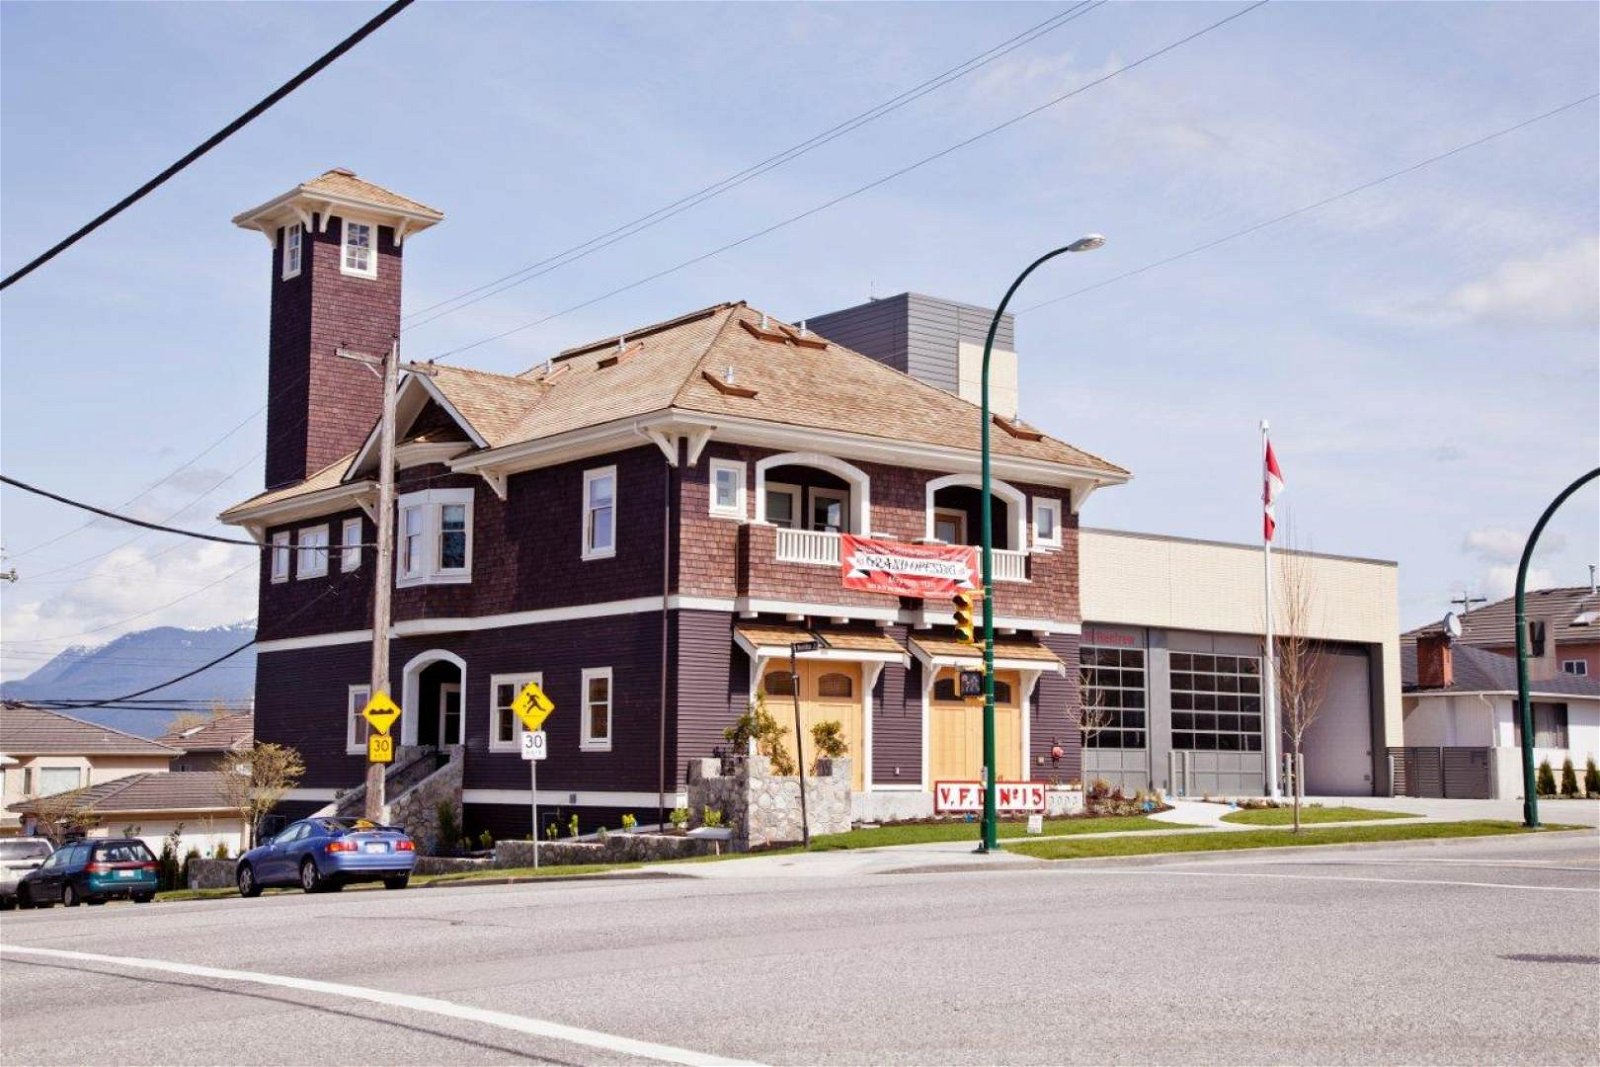 Vancouver Fire Hall No. 15